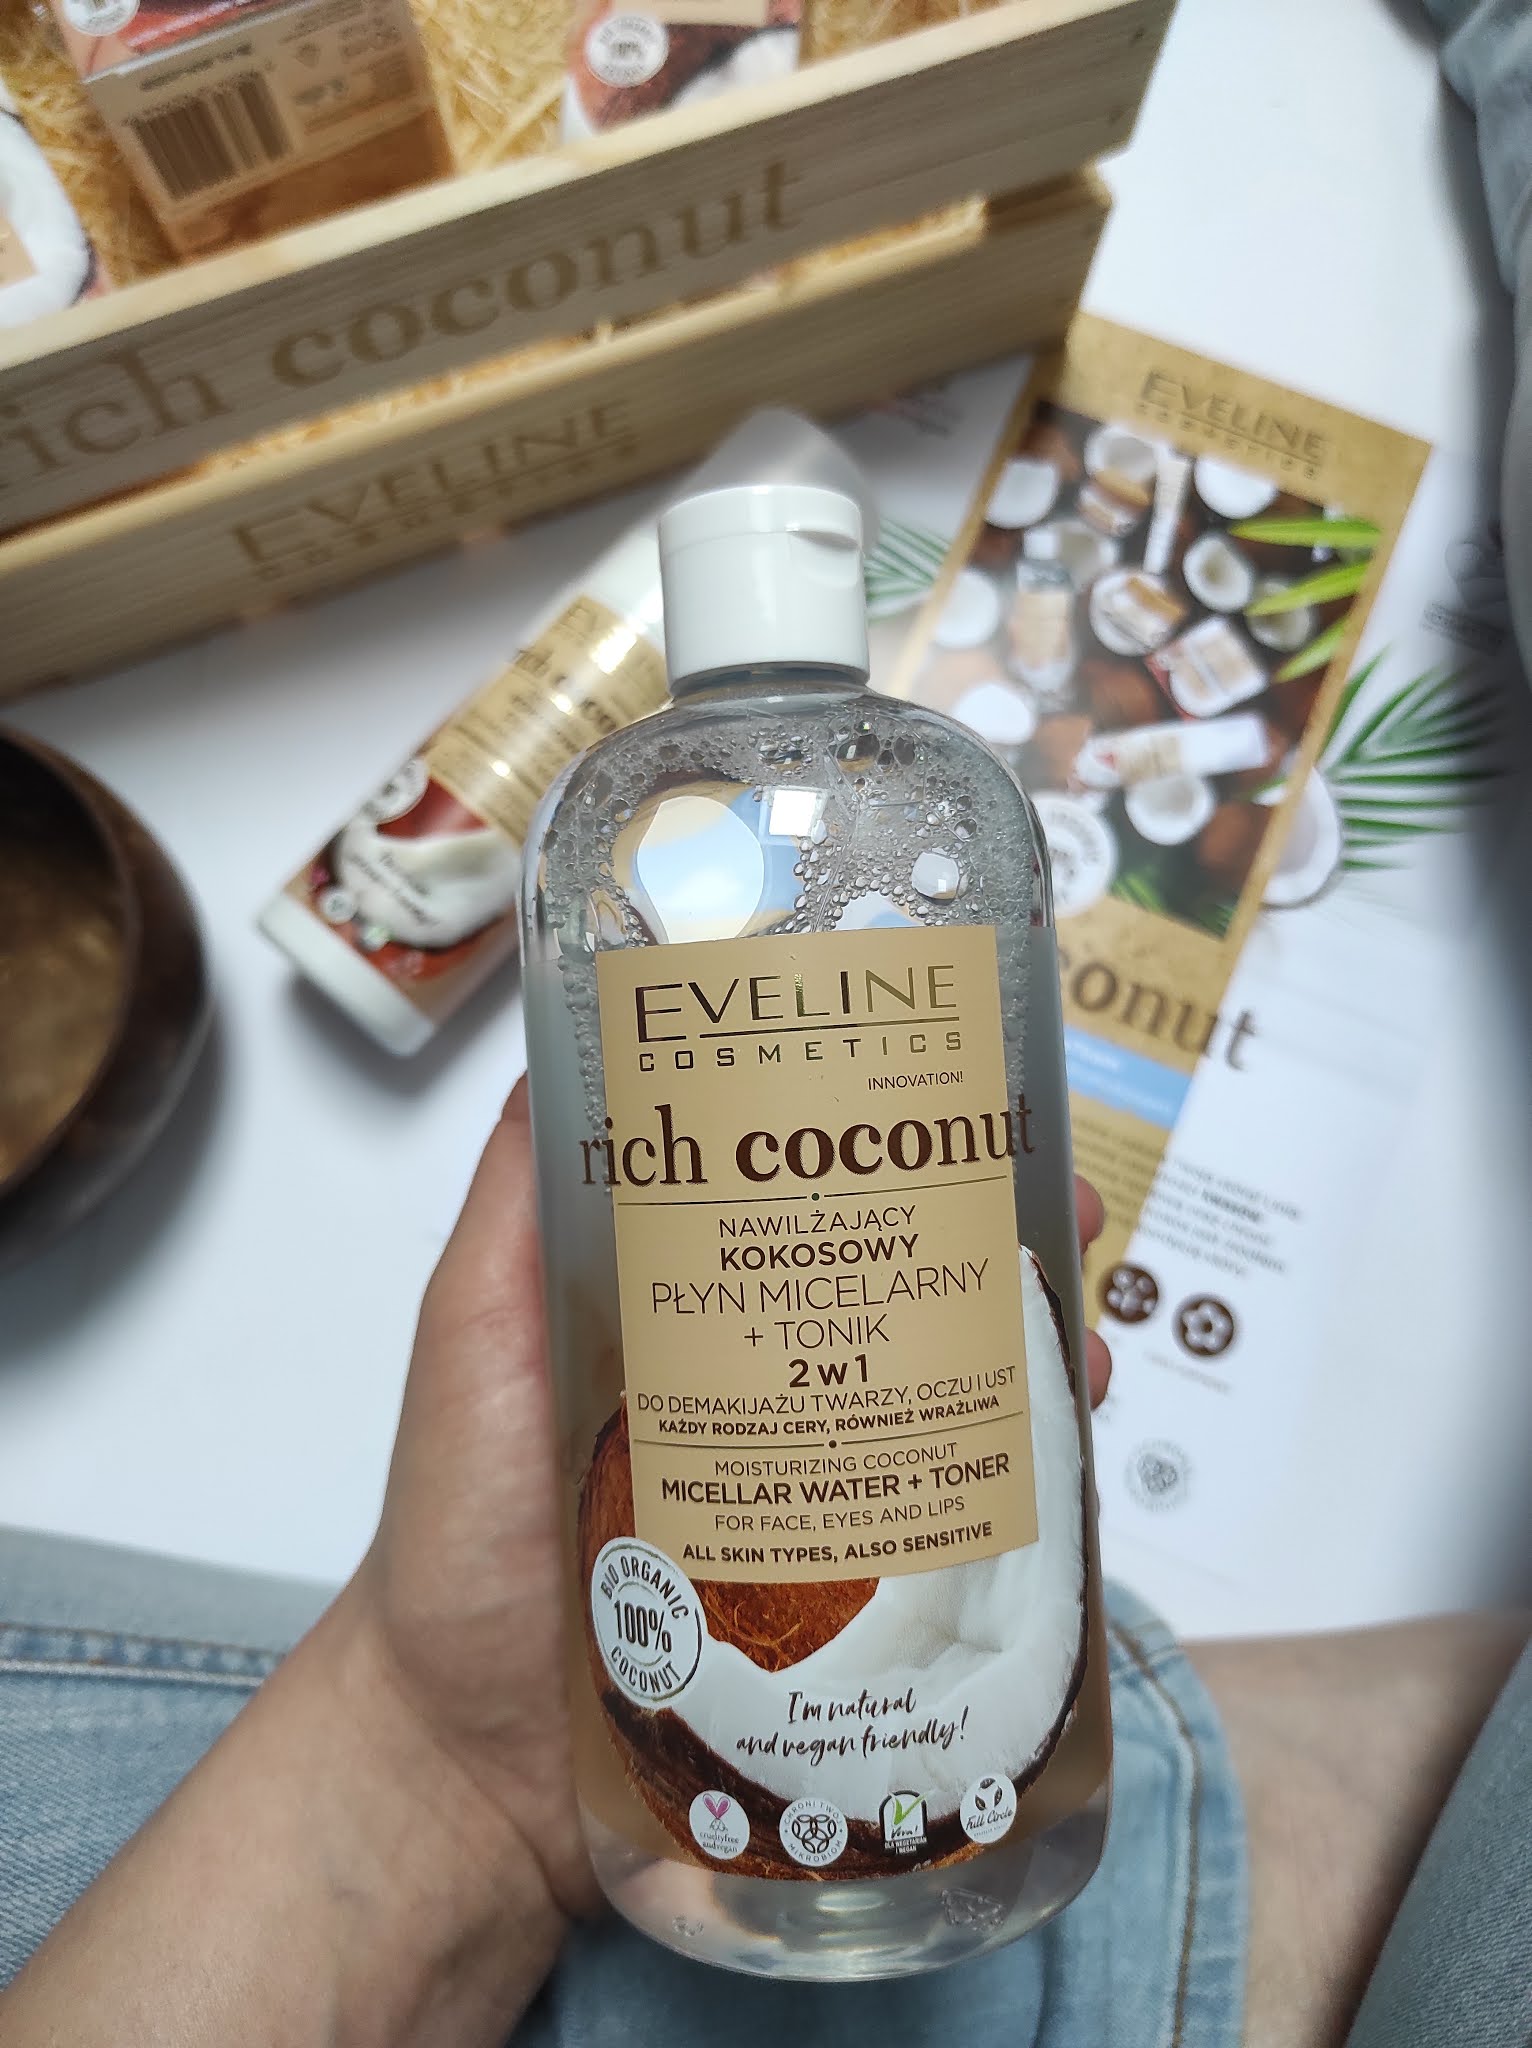 Rich  coconut Eveline Cosmetics